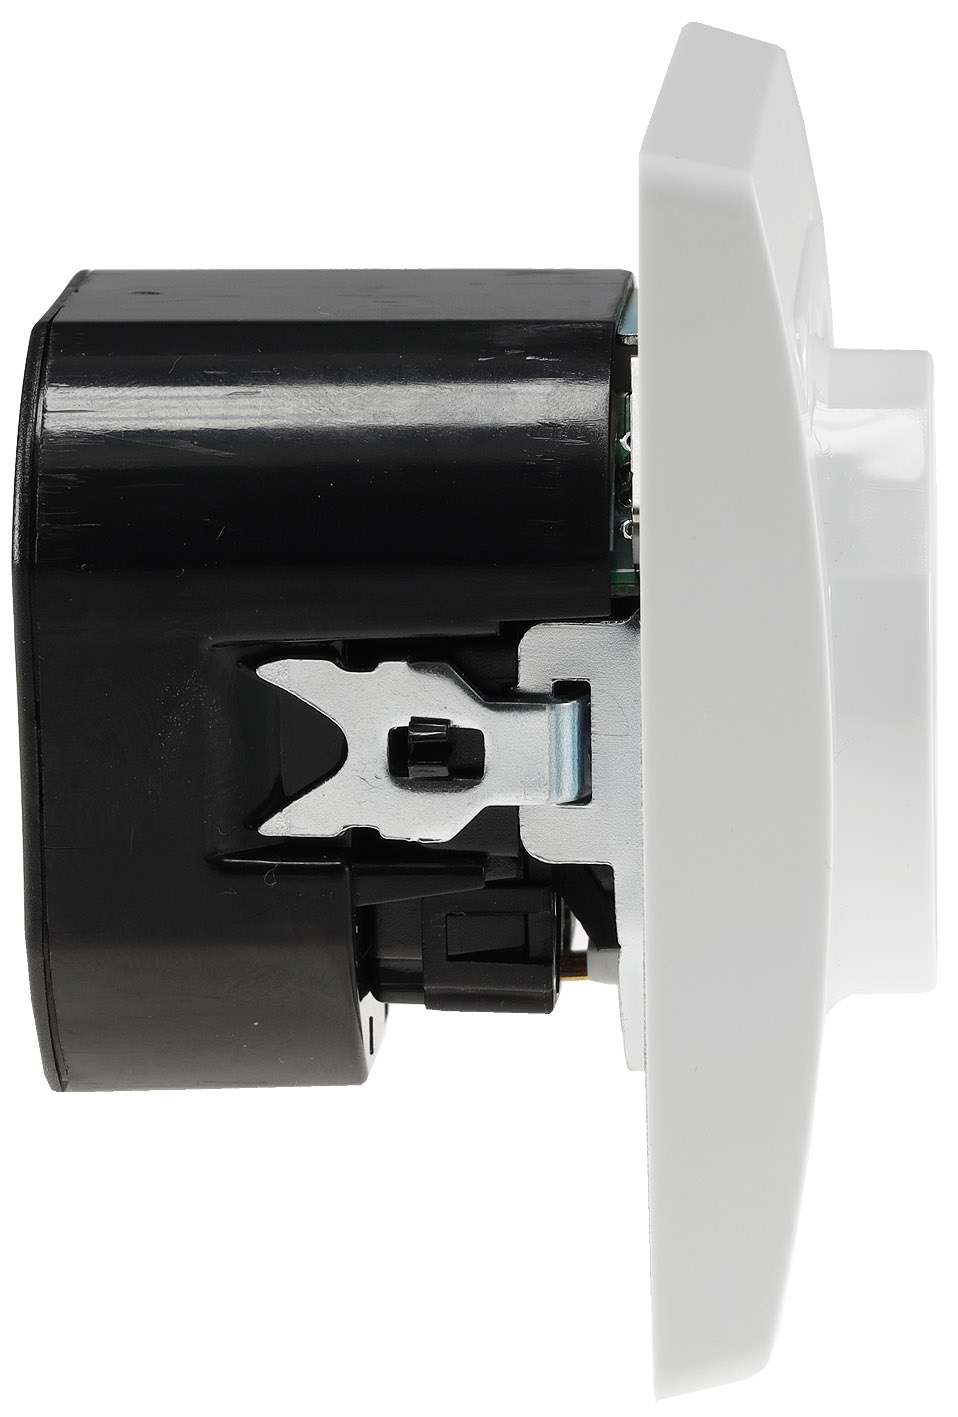 DELPHI Schutzkontakt-Steckdose, weiß 250V~/ 16A, Unterputz, USB-C / PD